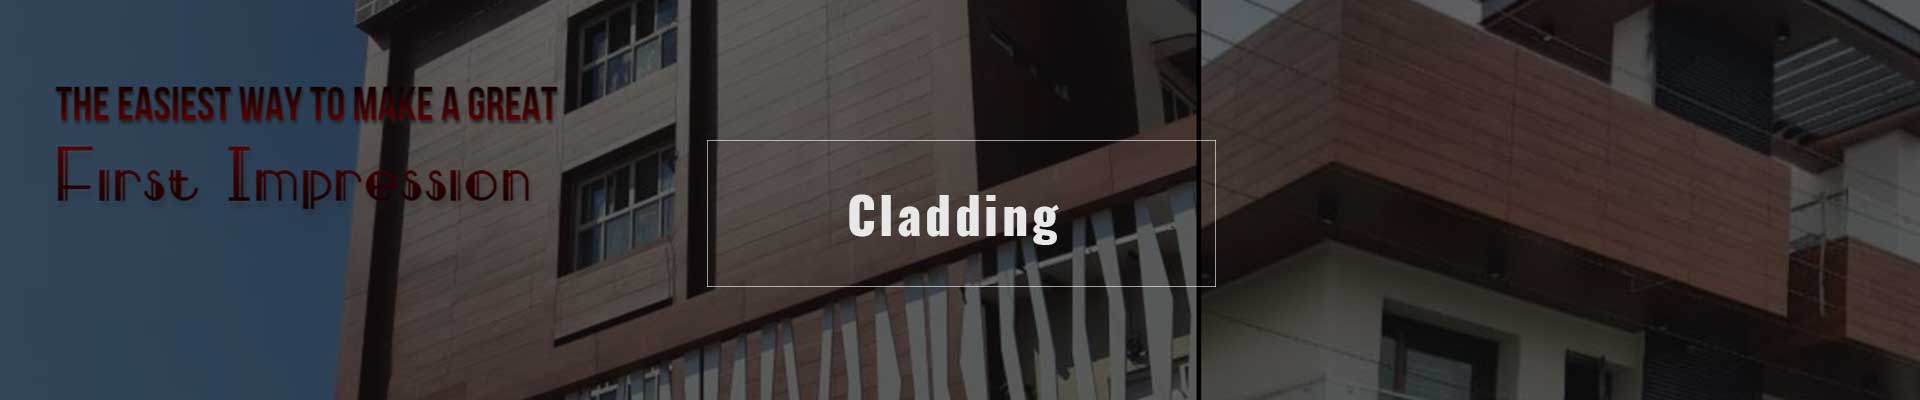 Cladding - Exterior Wall Cladding panels